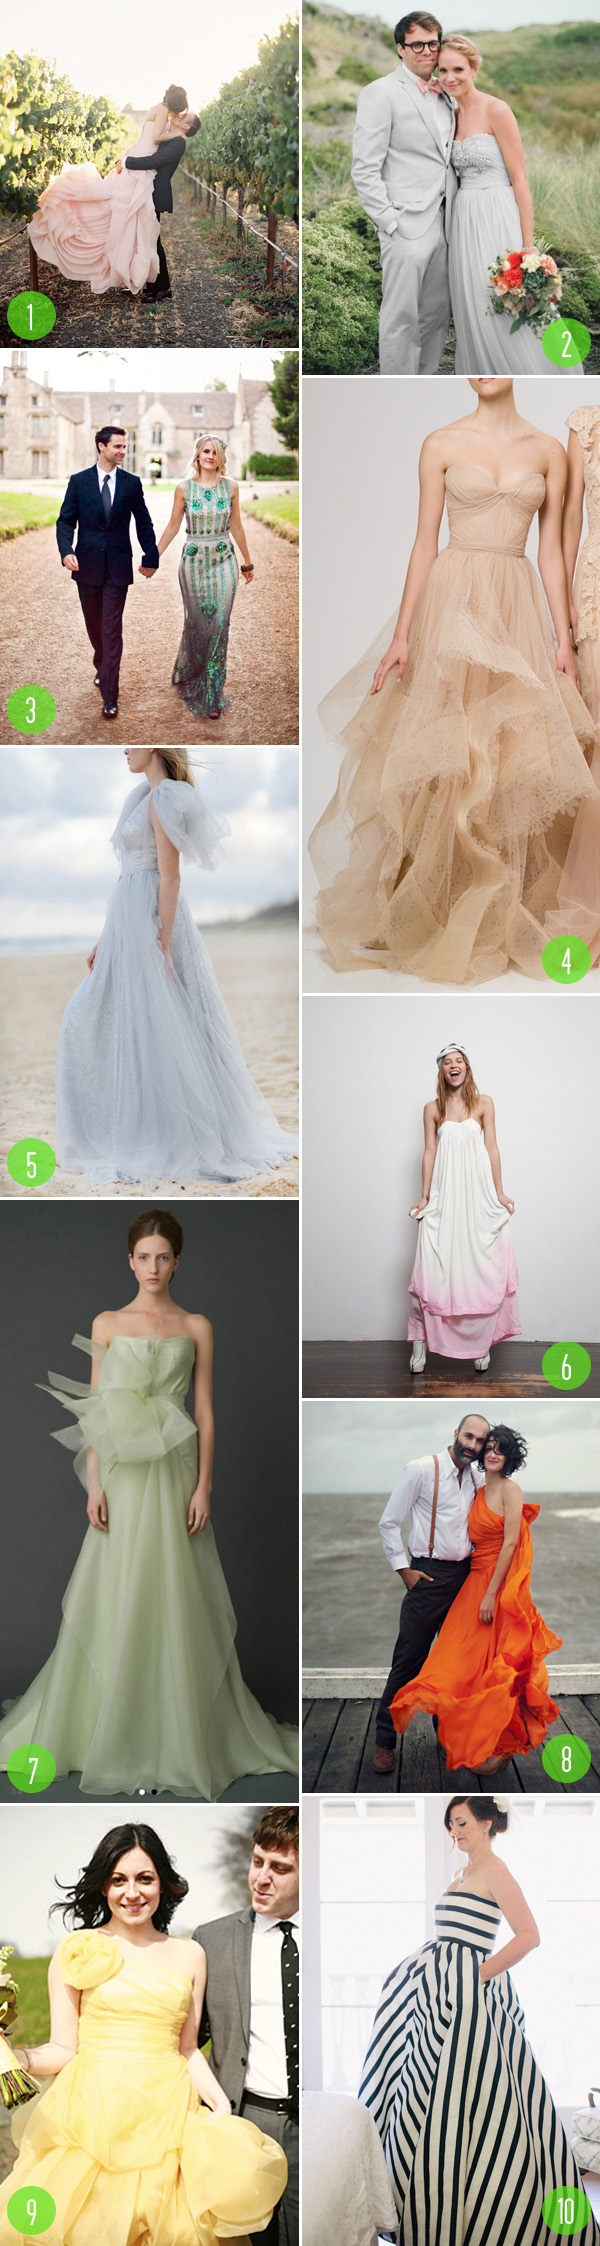 top 10: colored wedding dress